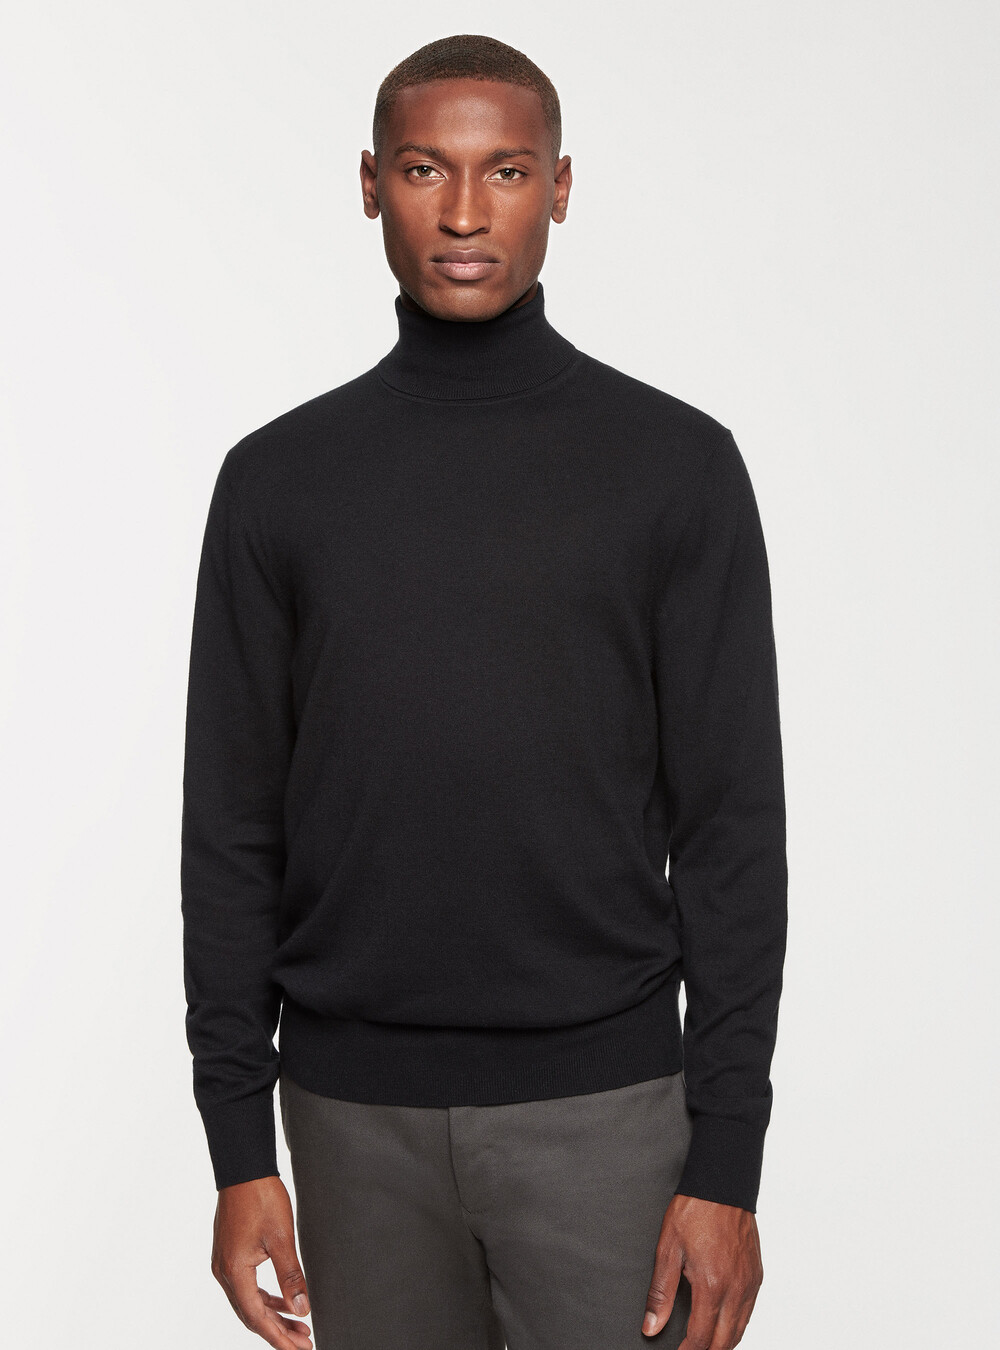 Silk and cashmere cotton turtleneck | GutteridgeUS | Men's Sweaters